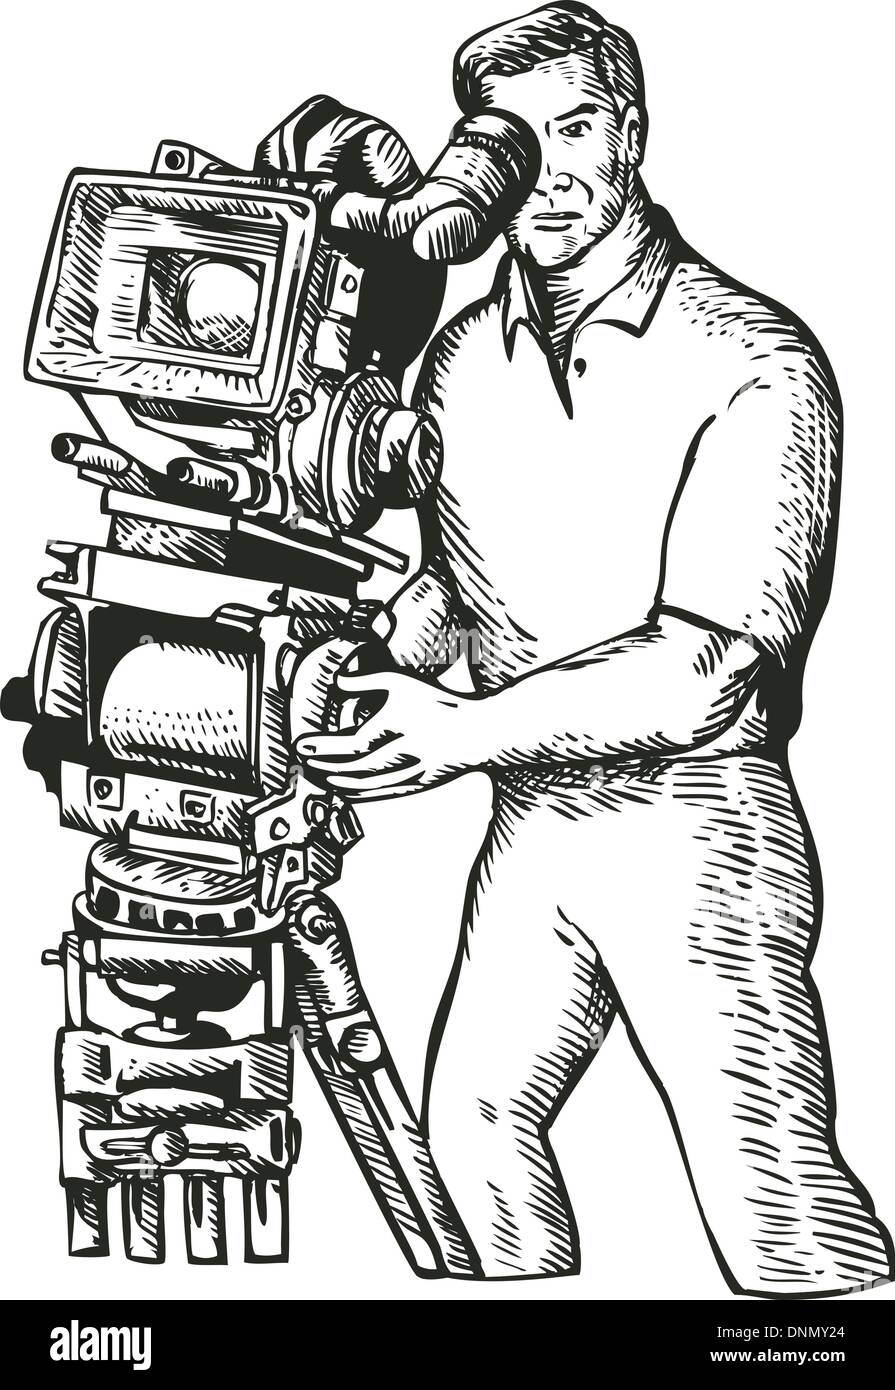 Illustration of director movie camera vector illustration of a cameraman movie director filming vintage camera set inside diamond shape done in retro style. Stock Vector